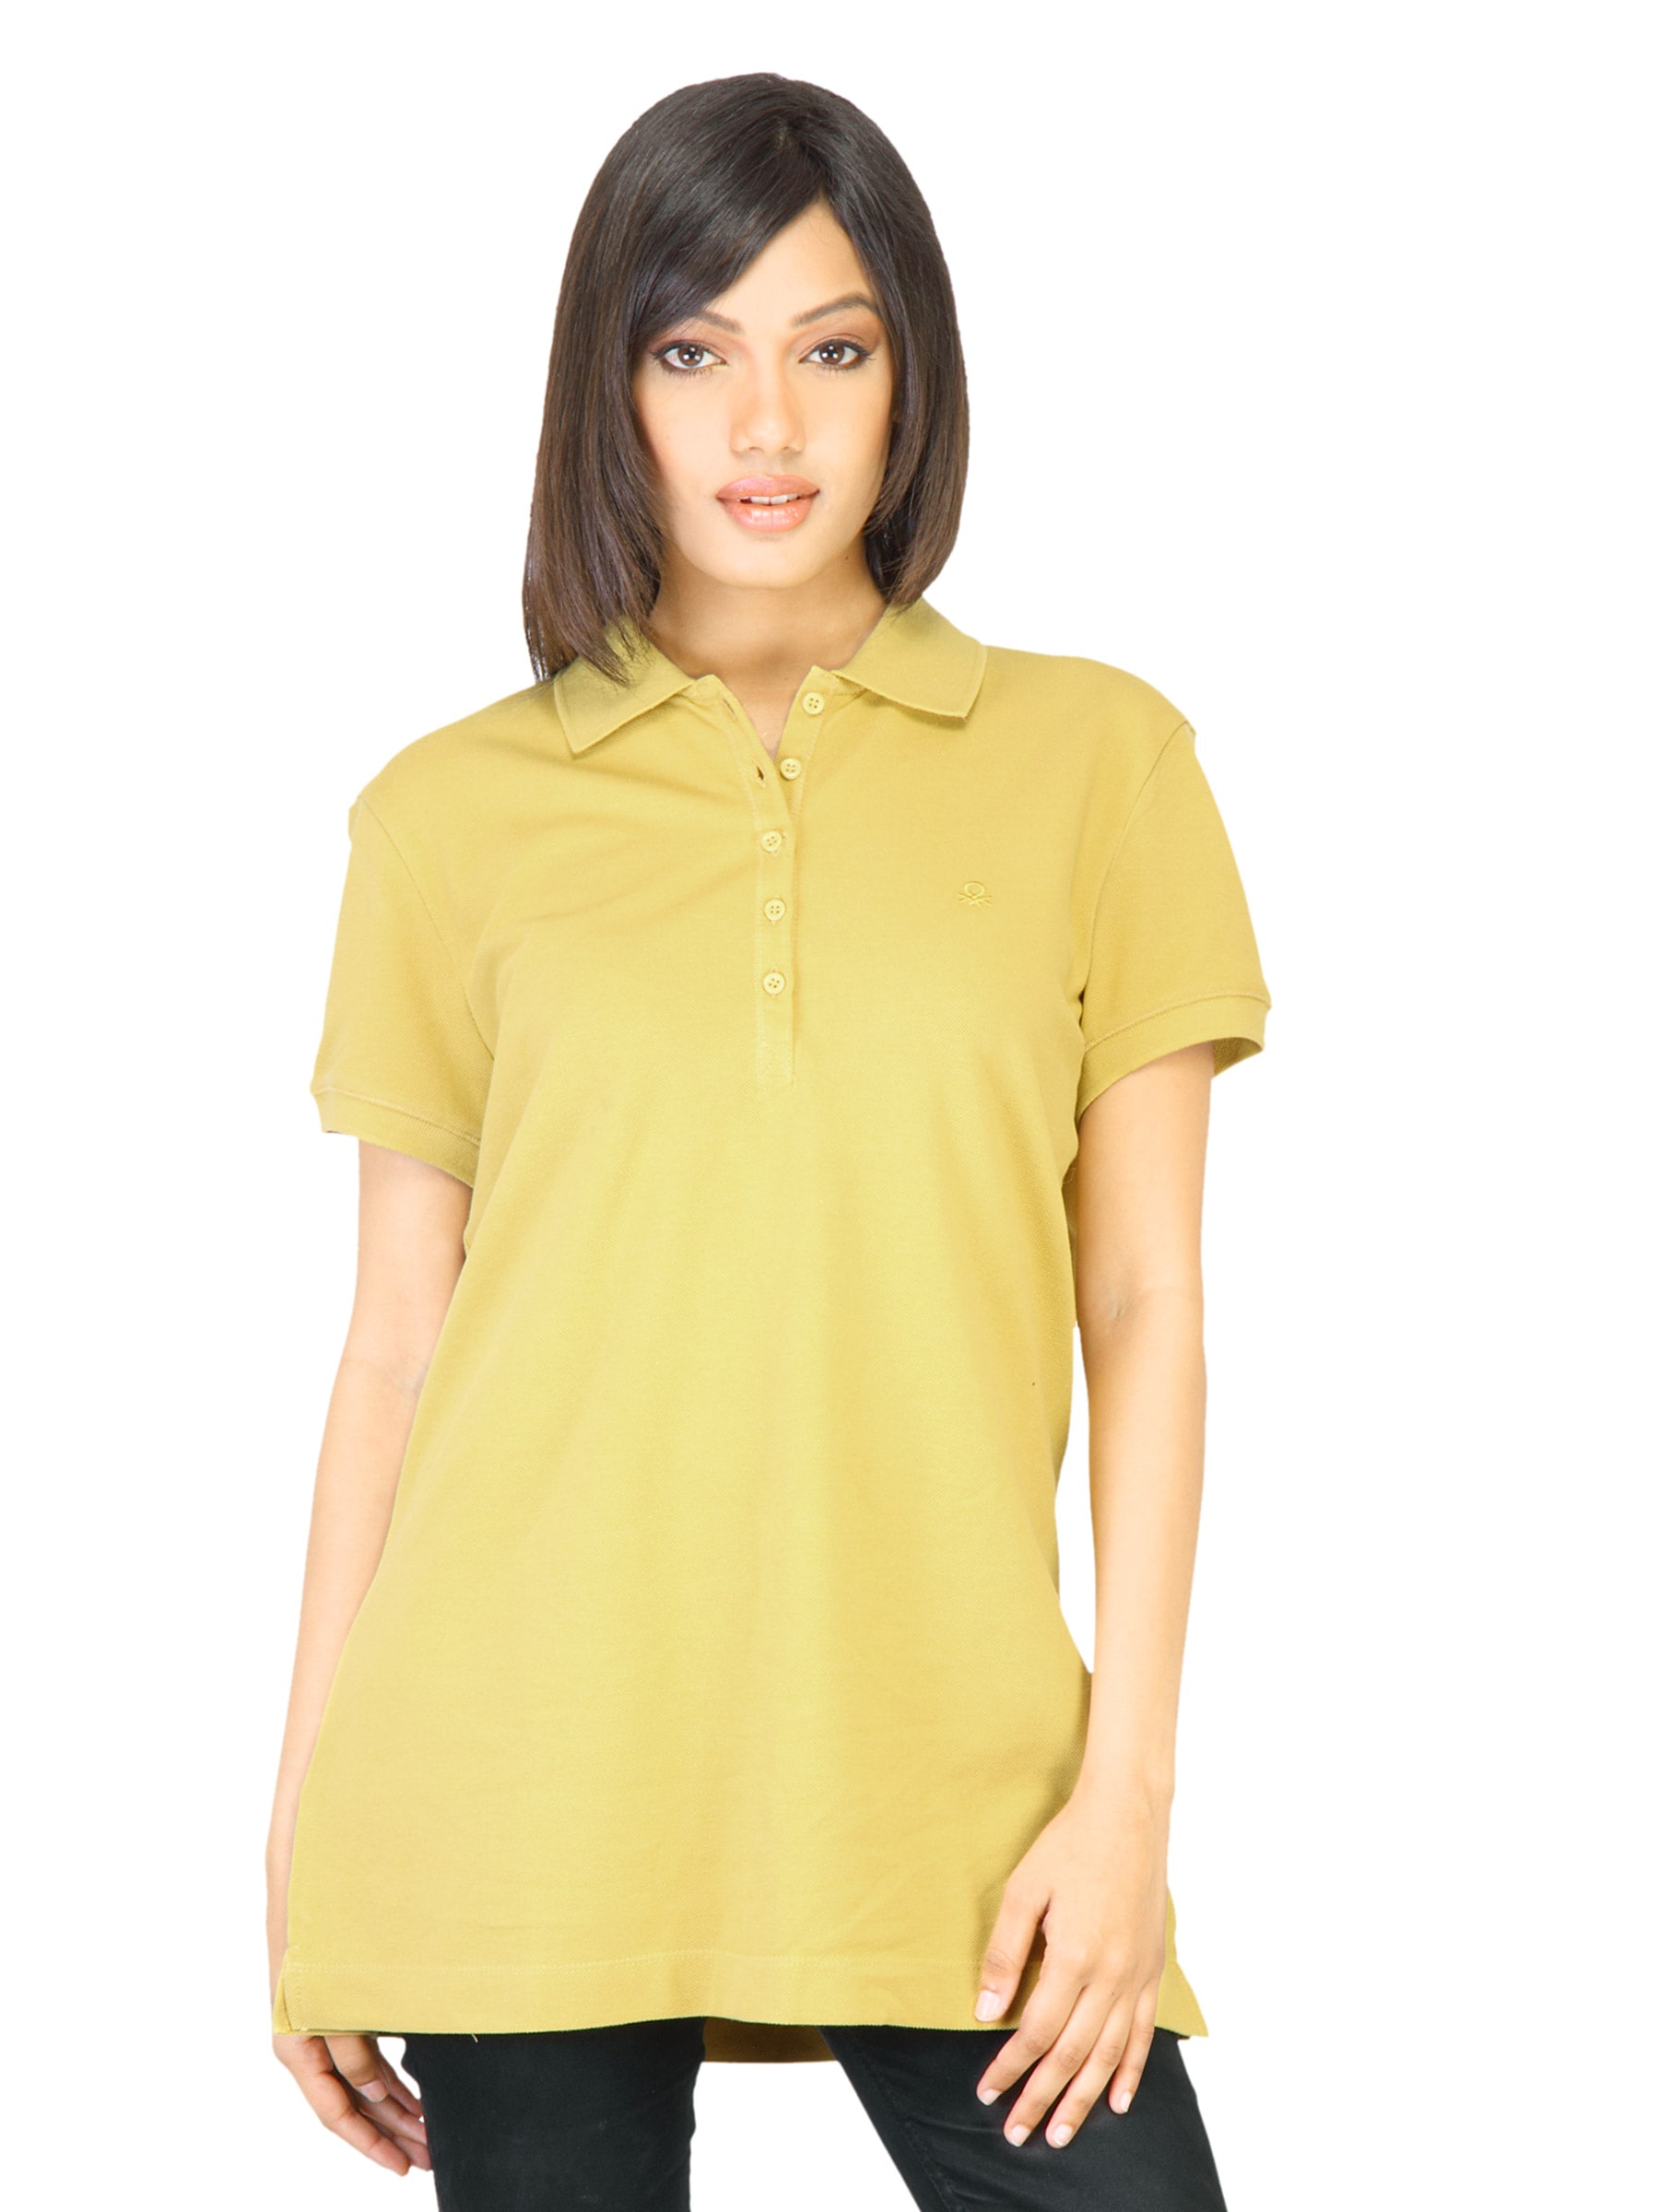 United Colors of Benetton Women Yellow T-shirt